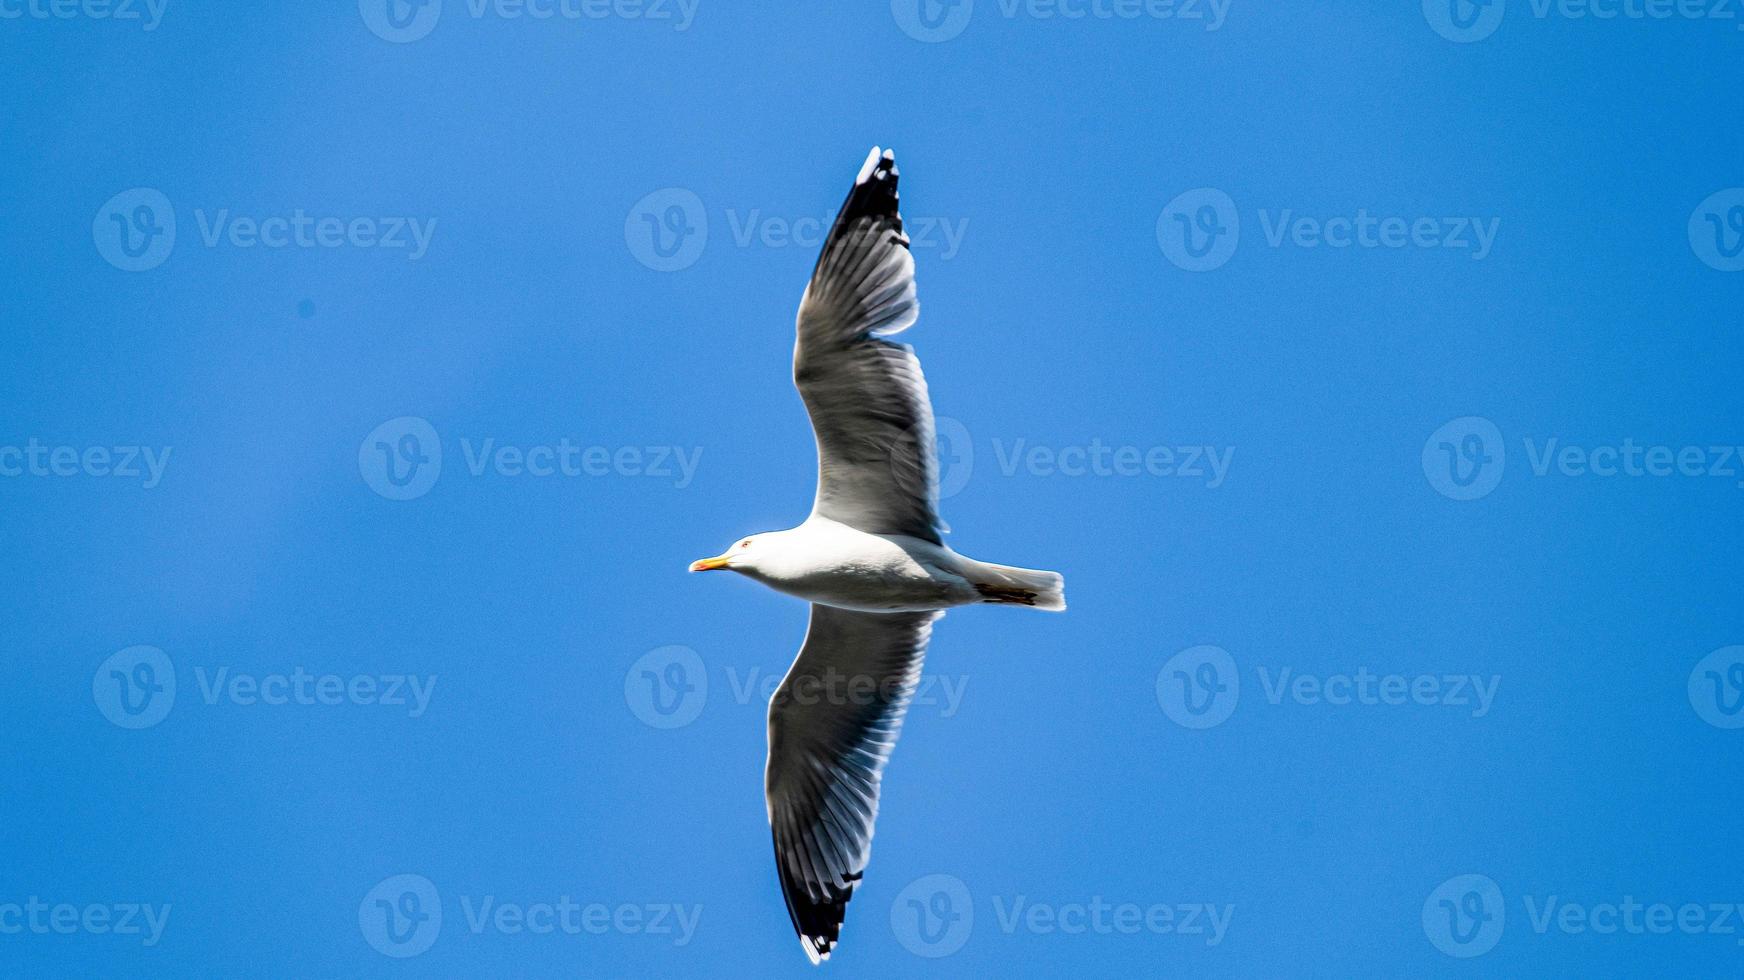 gaivota voando no céu azul foto